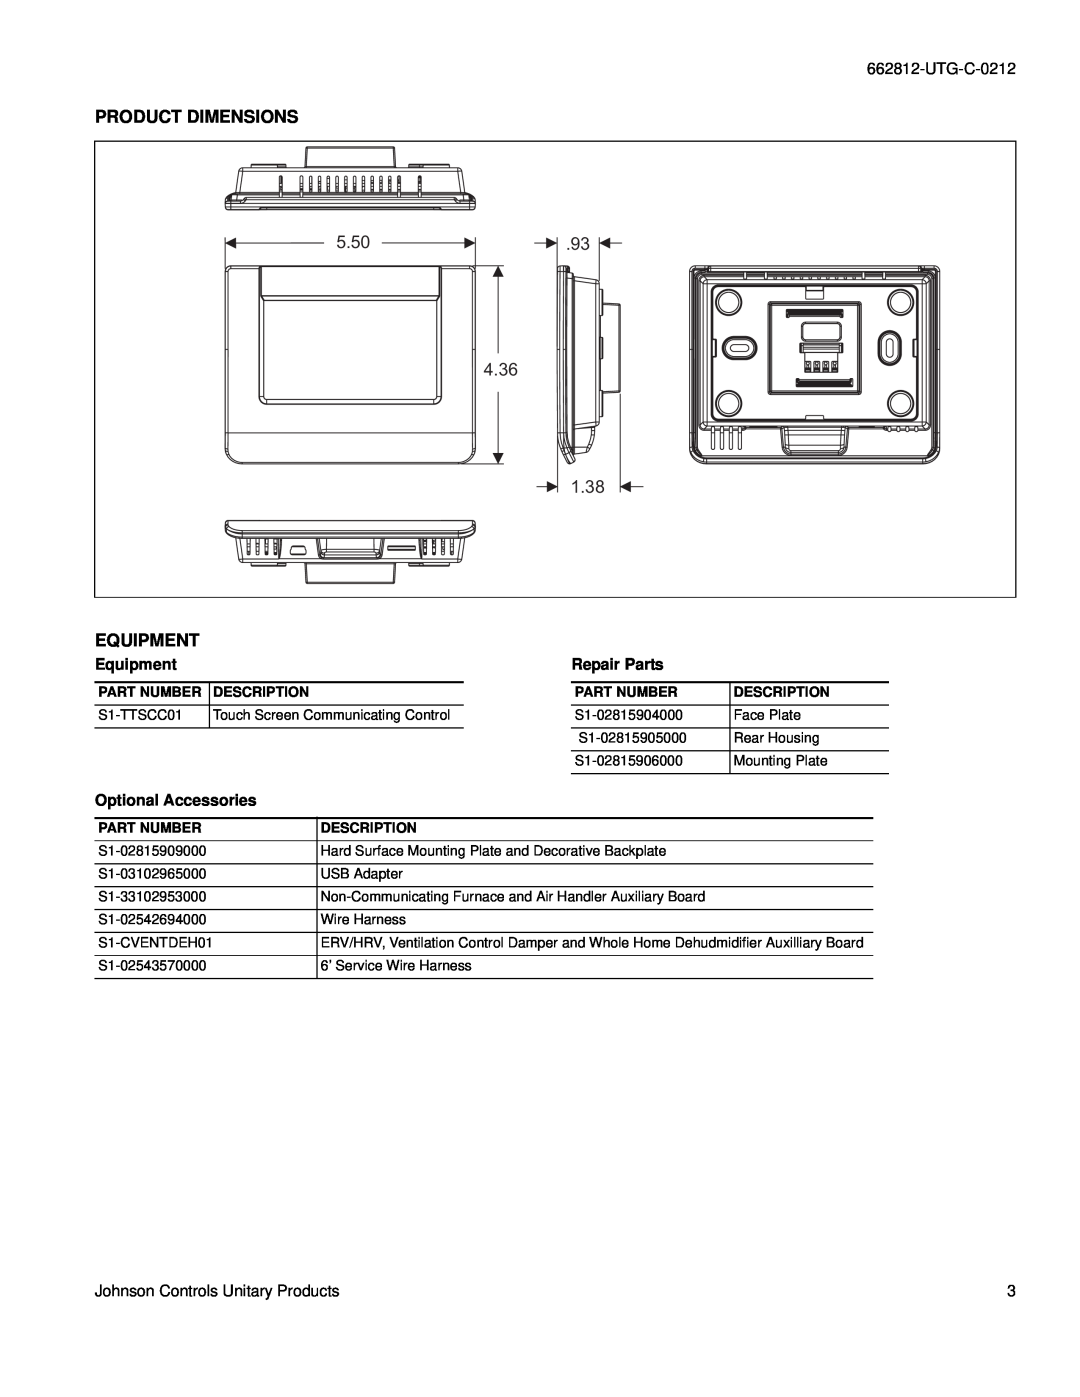 Johnson Controls S1-TTSCC01 Product Dimensions, 5.50, 4.36, Equipment, Repair Parts, Optional Accessories, Part Number 